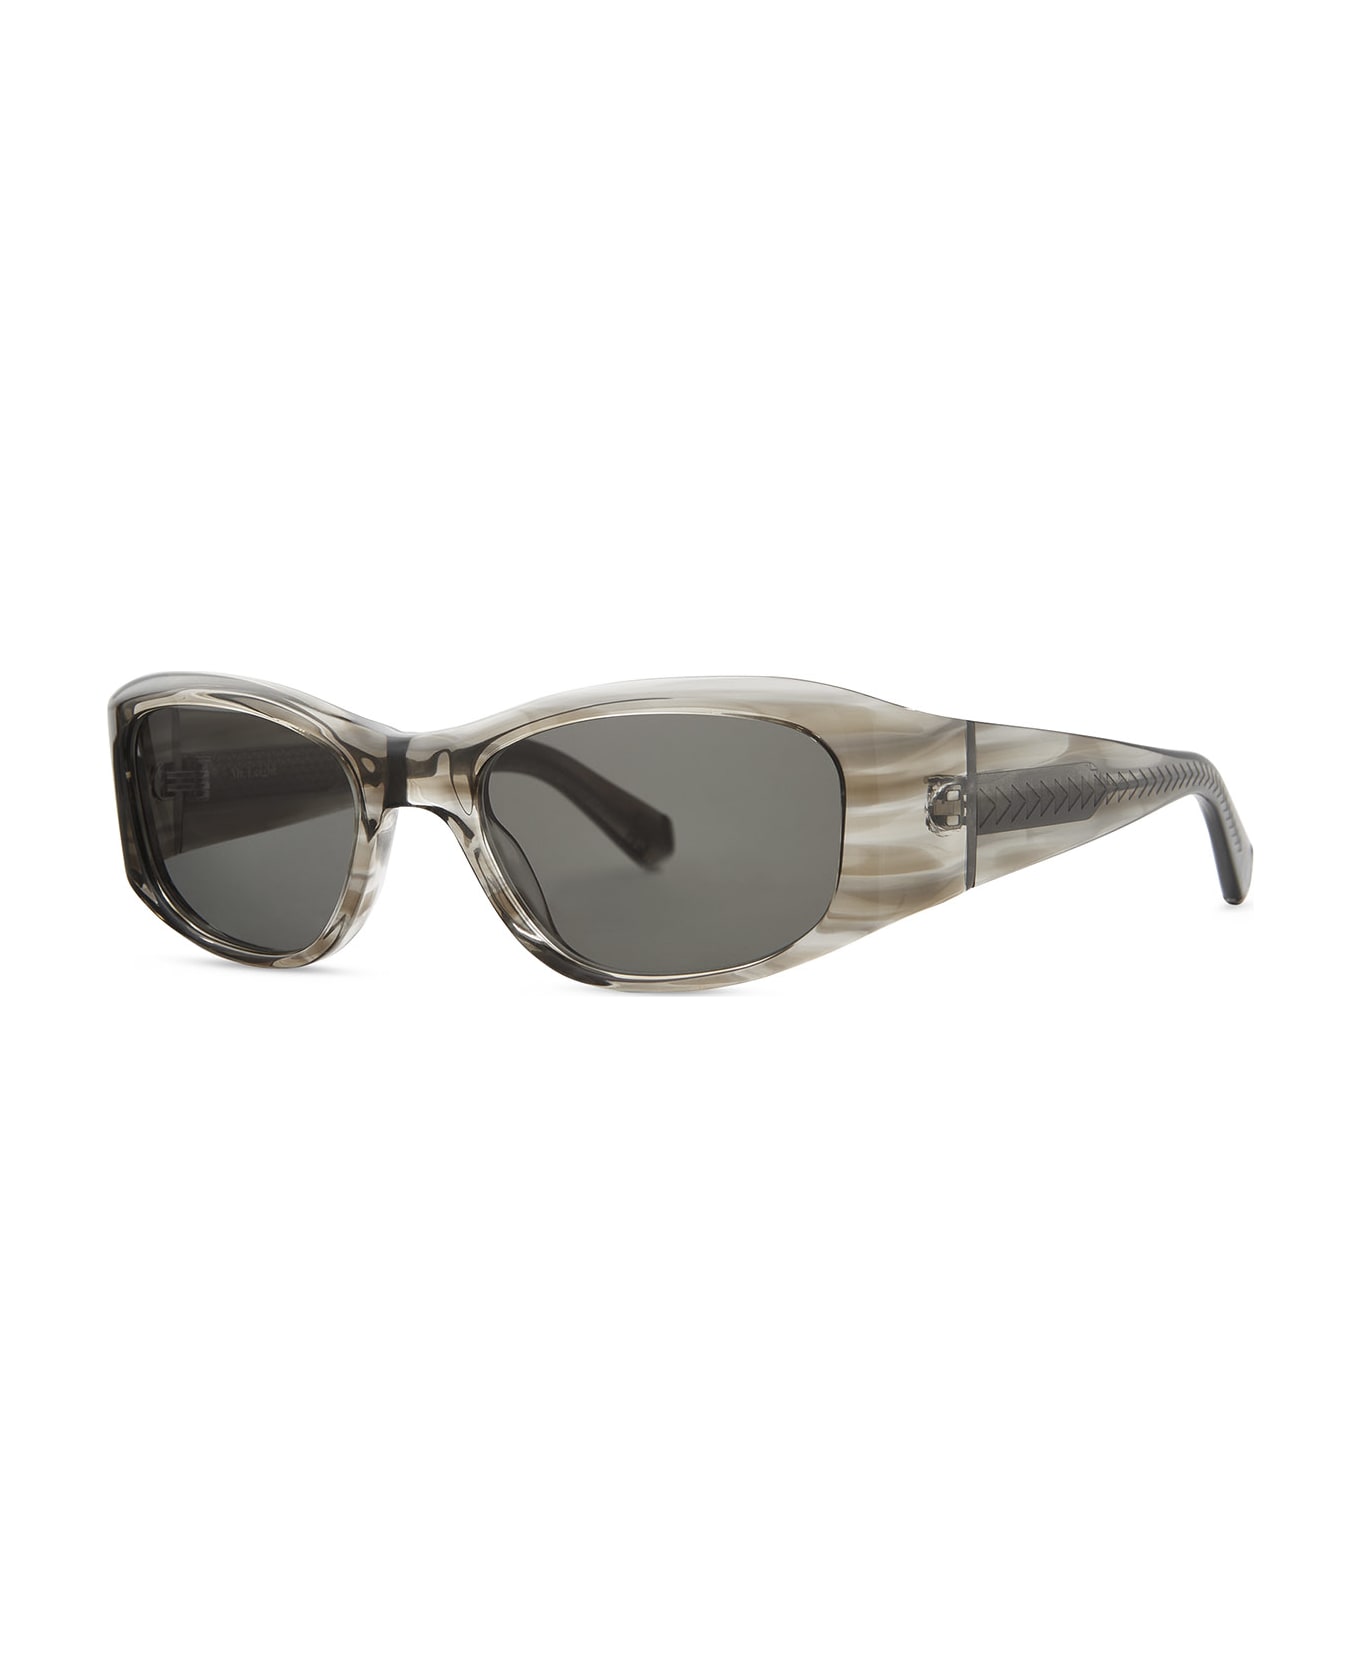 Mr. Leight Aloha Doc S Celestial Grey-pewter Sunglasses - Celestial Grey-Pewter サングラス